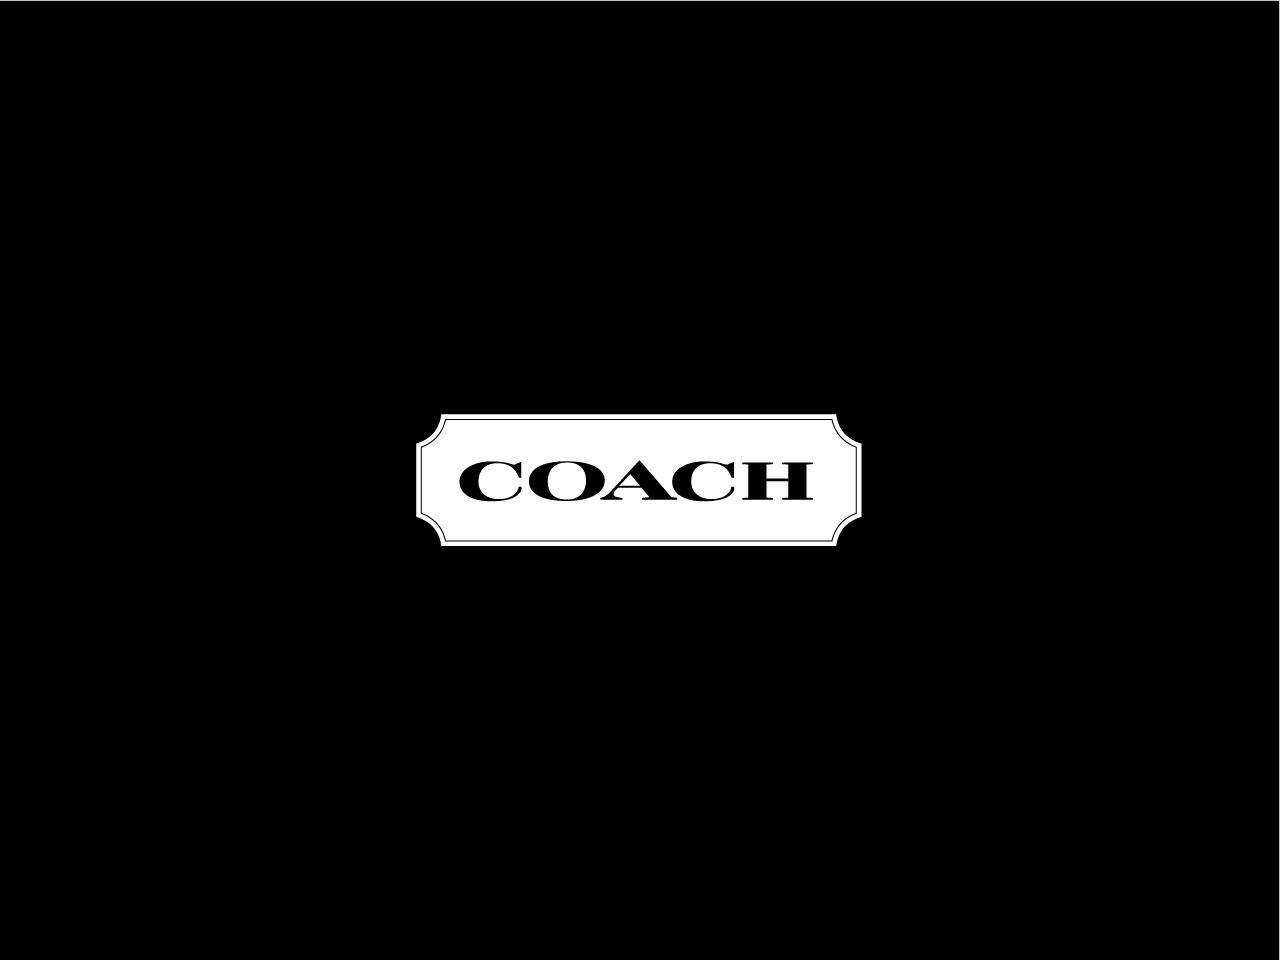 Black And White Coach Logo Background